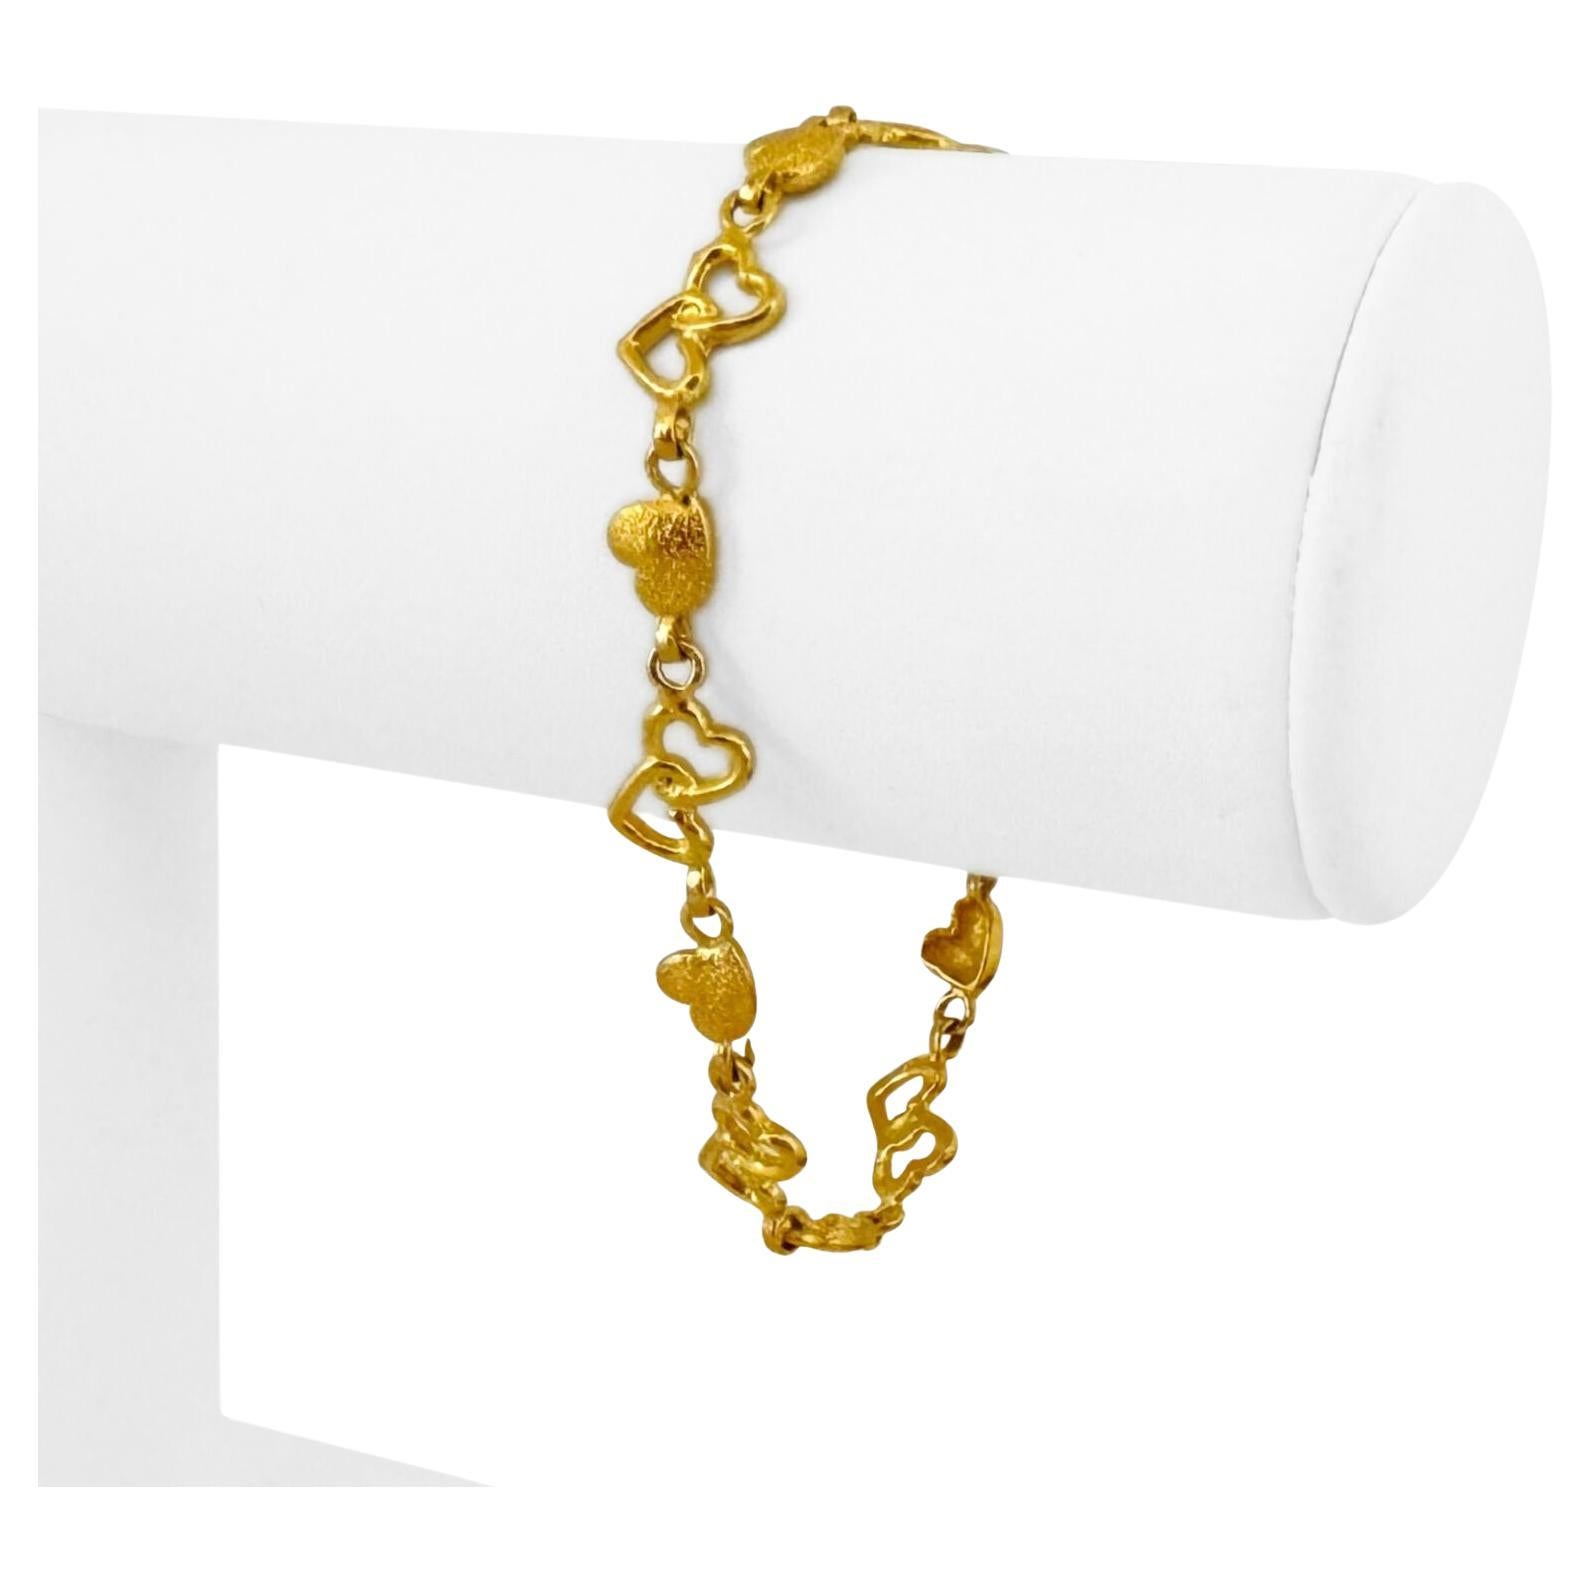 shreeomjewellers #bracelet #foryoupage #gold #24karatgold | TikTok